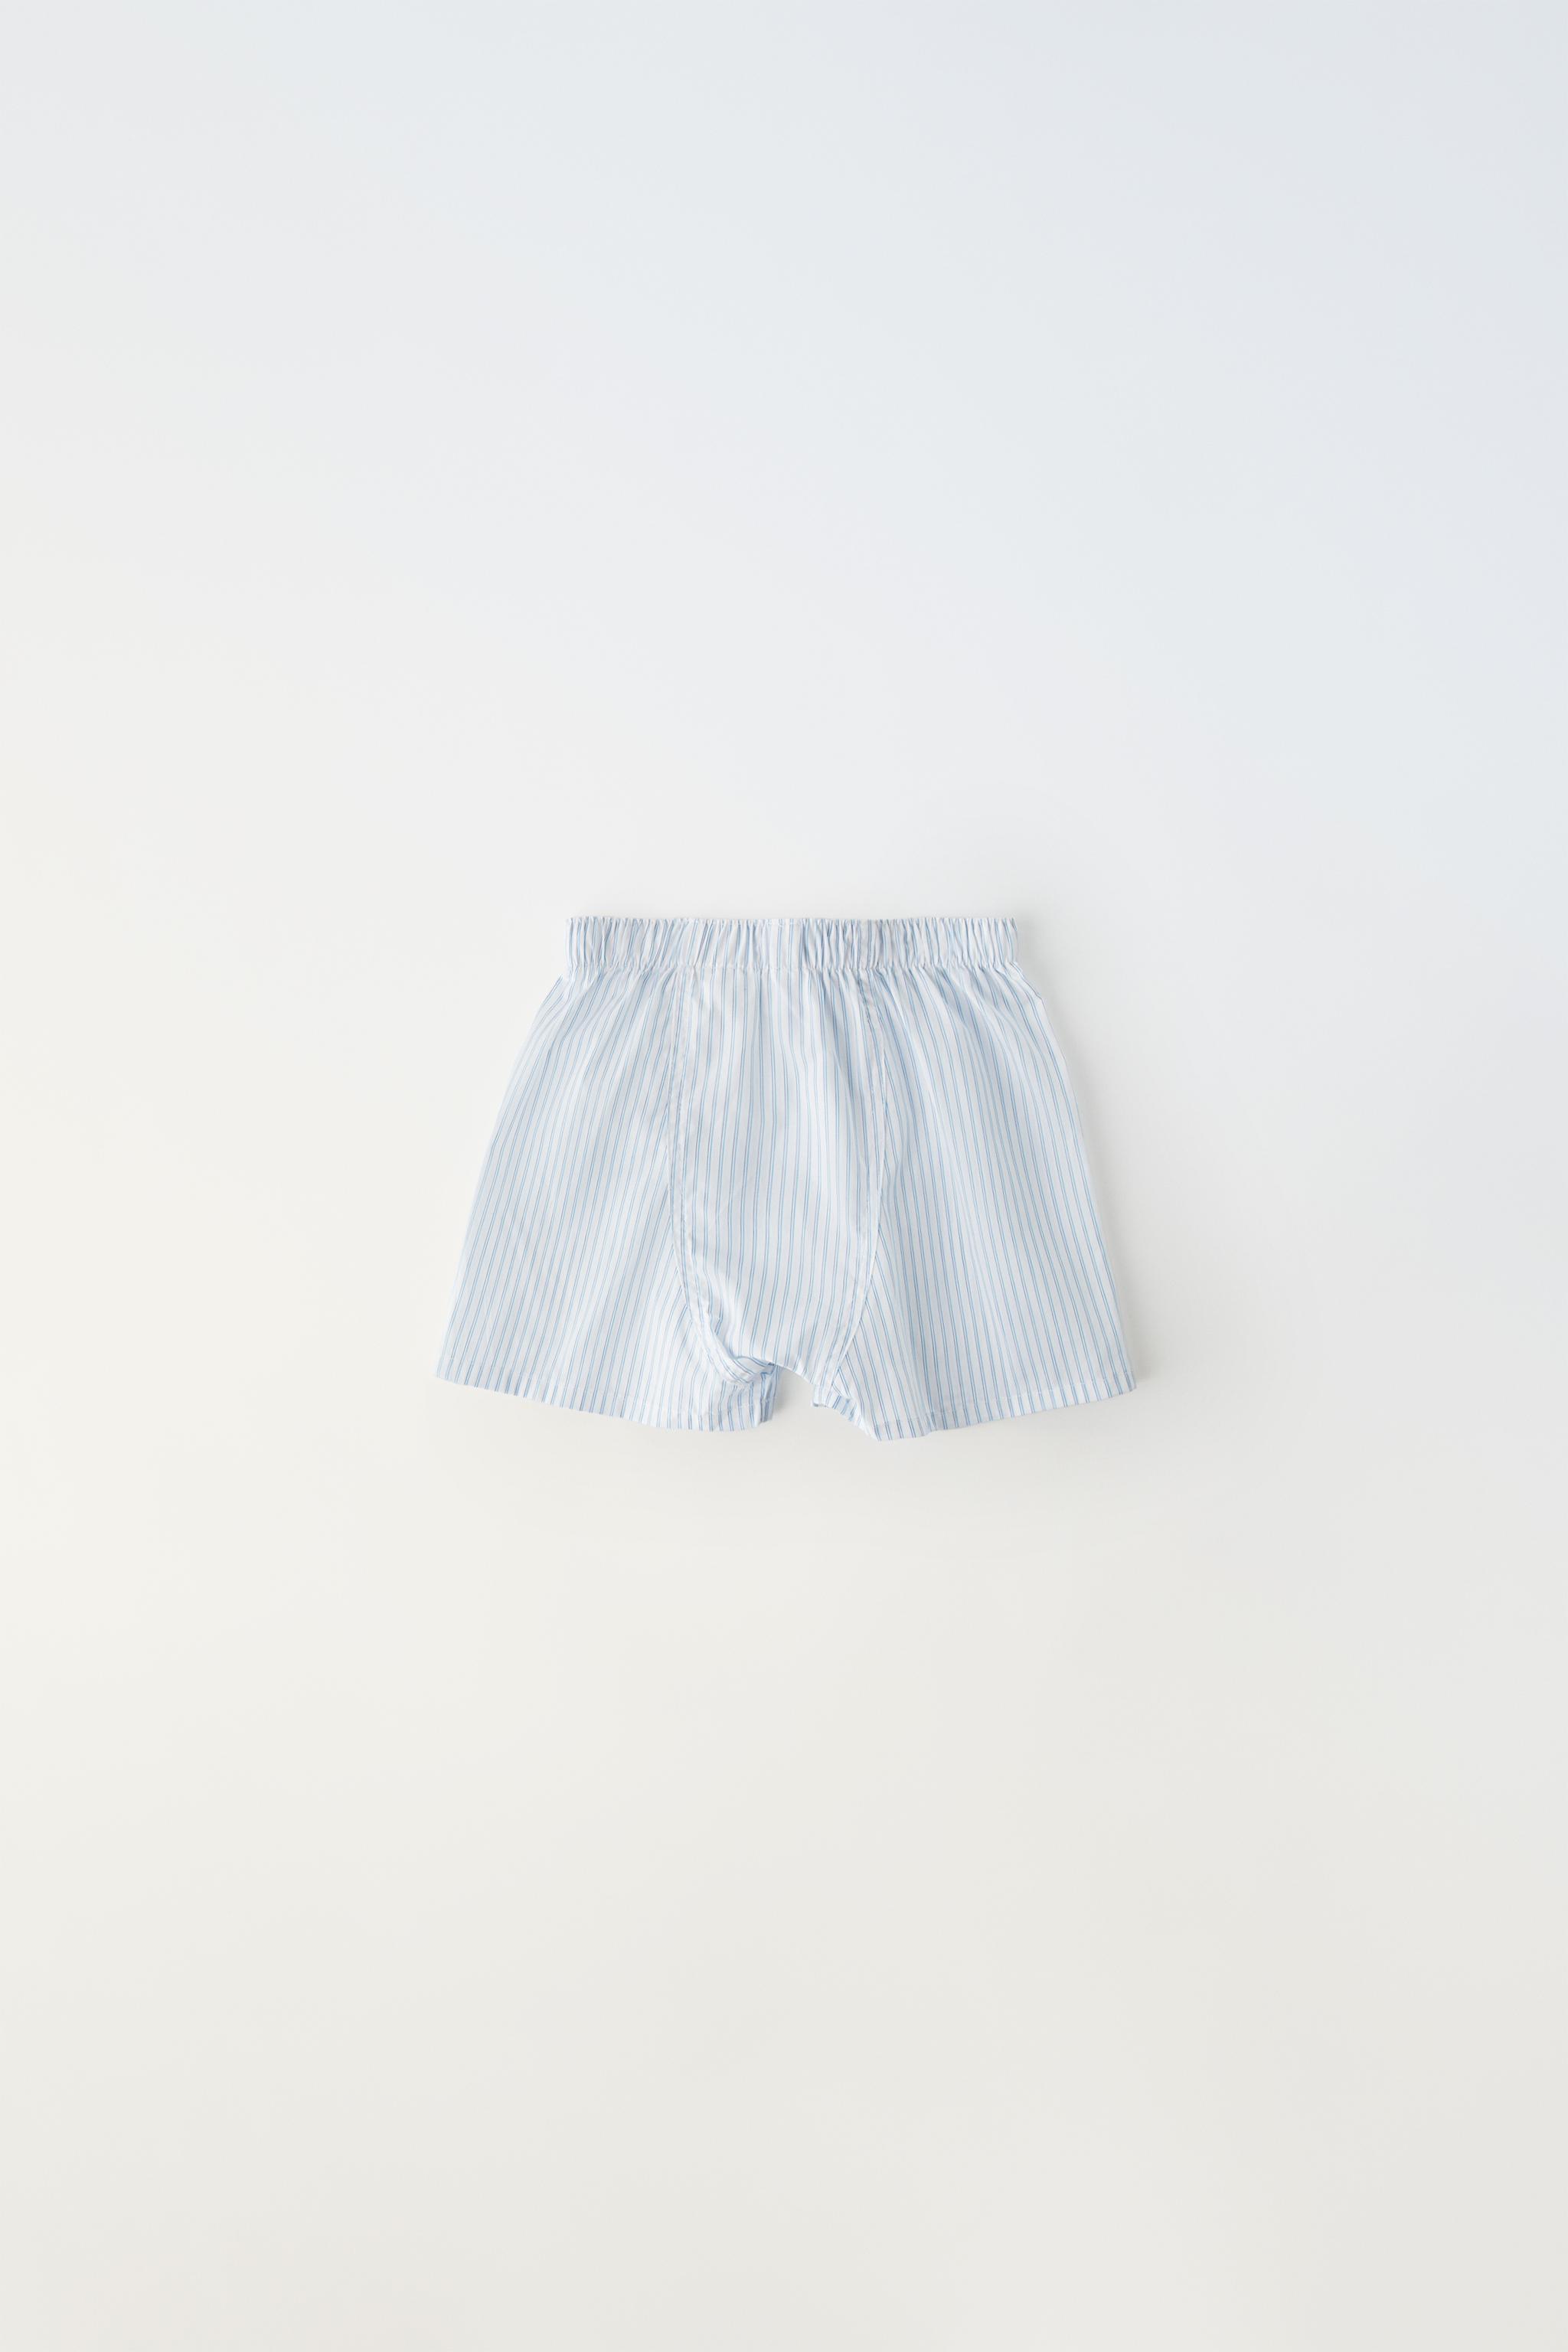 NWT. Zara Man Textured Poplin Boxer Shorts/Briefs. Size L.